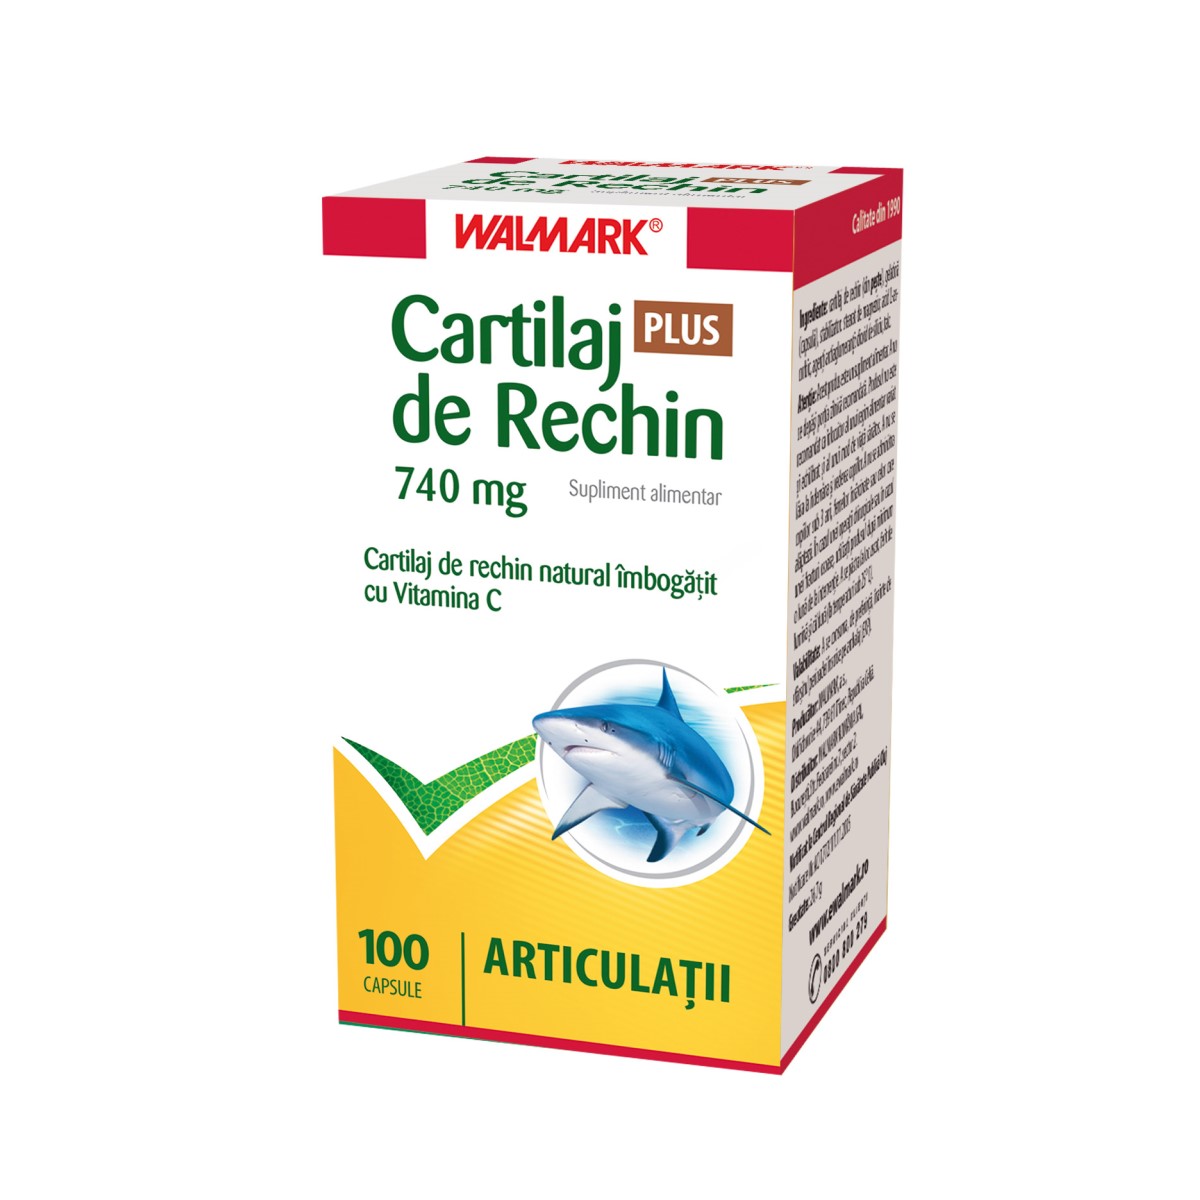 Cartilaj de Rechin, 30 capsule, Vitacare